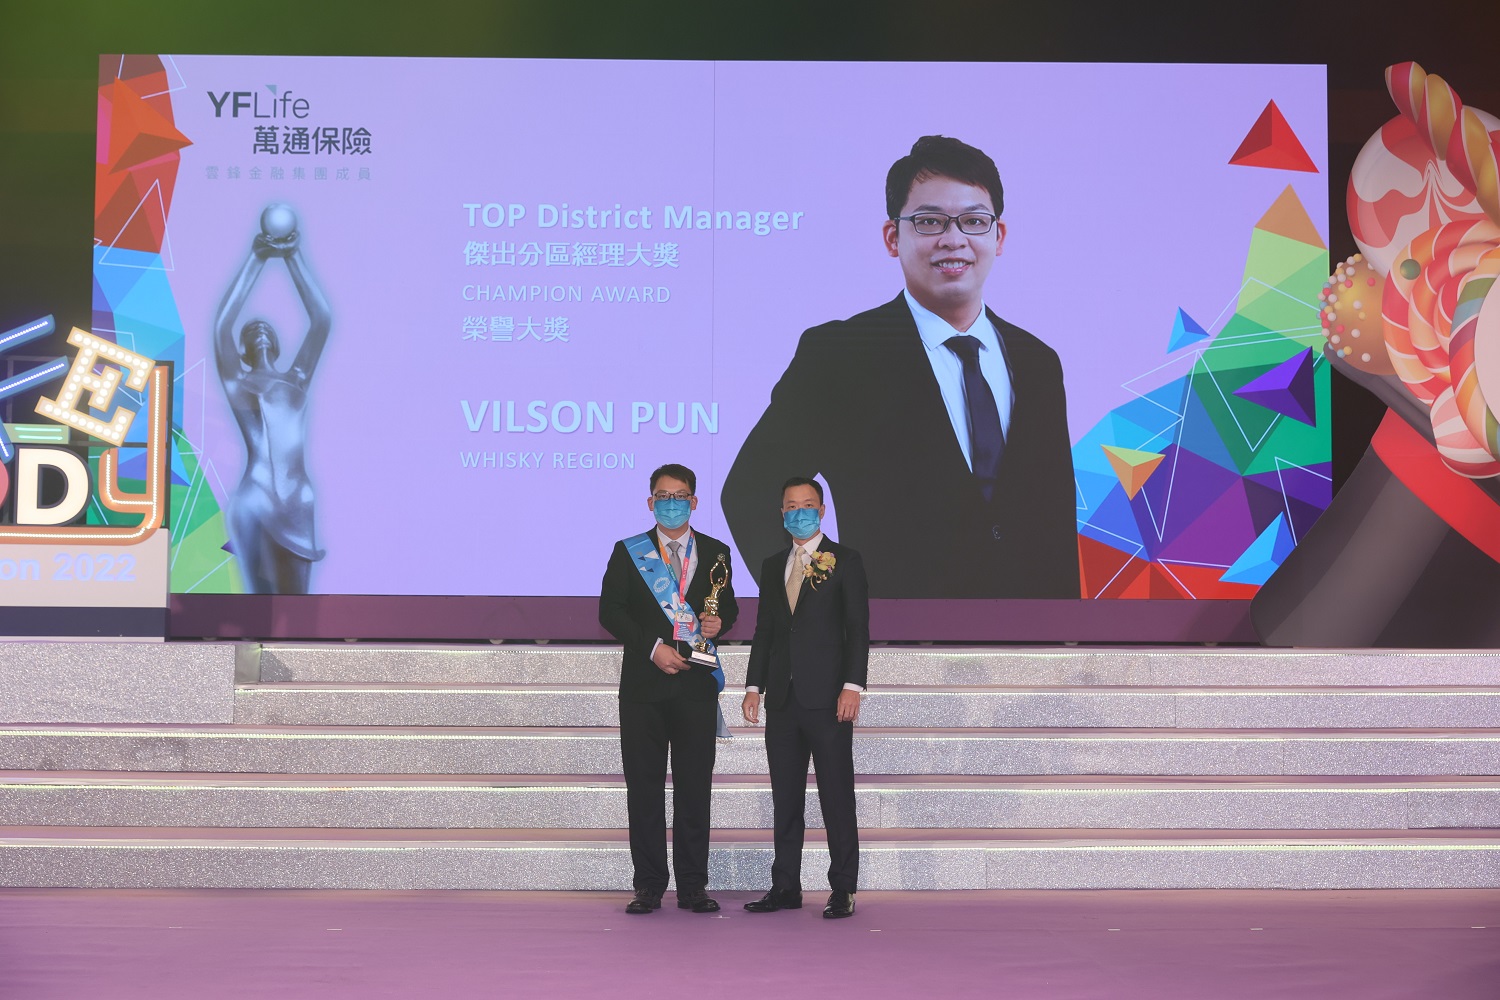 Mr. Vilson Pun, Champion Award winner of Top District Manager. 